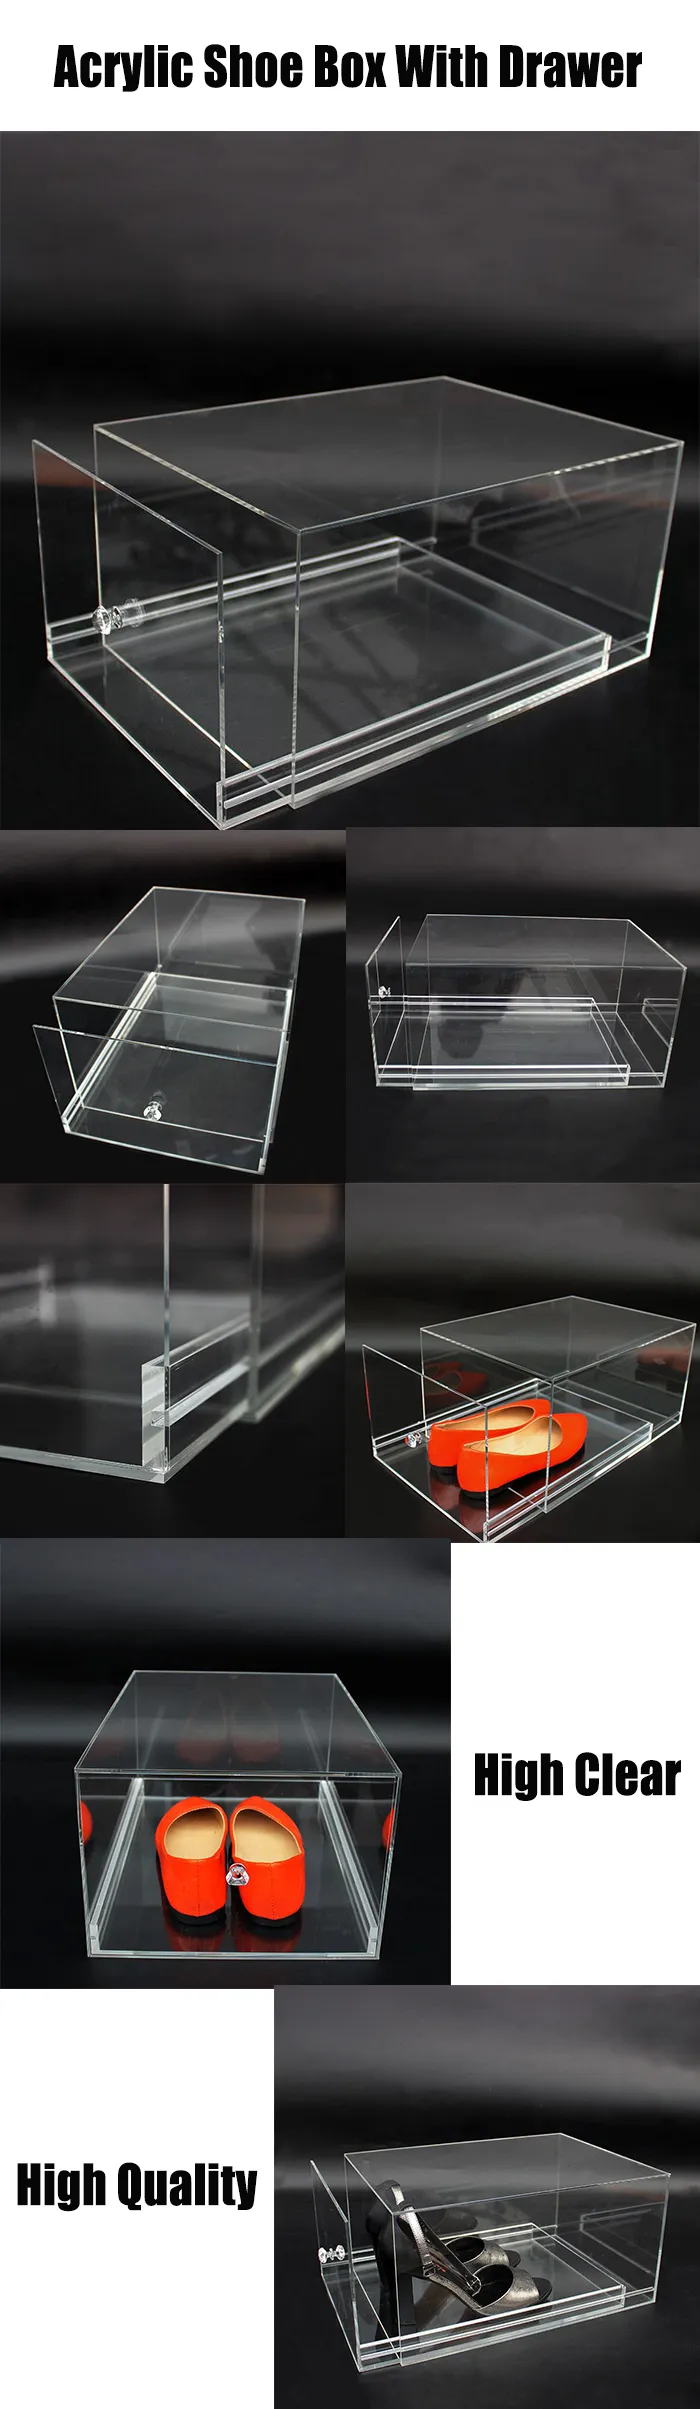 Acrylic Shoe Box With Drawer